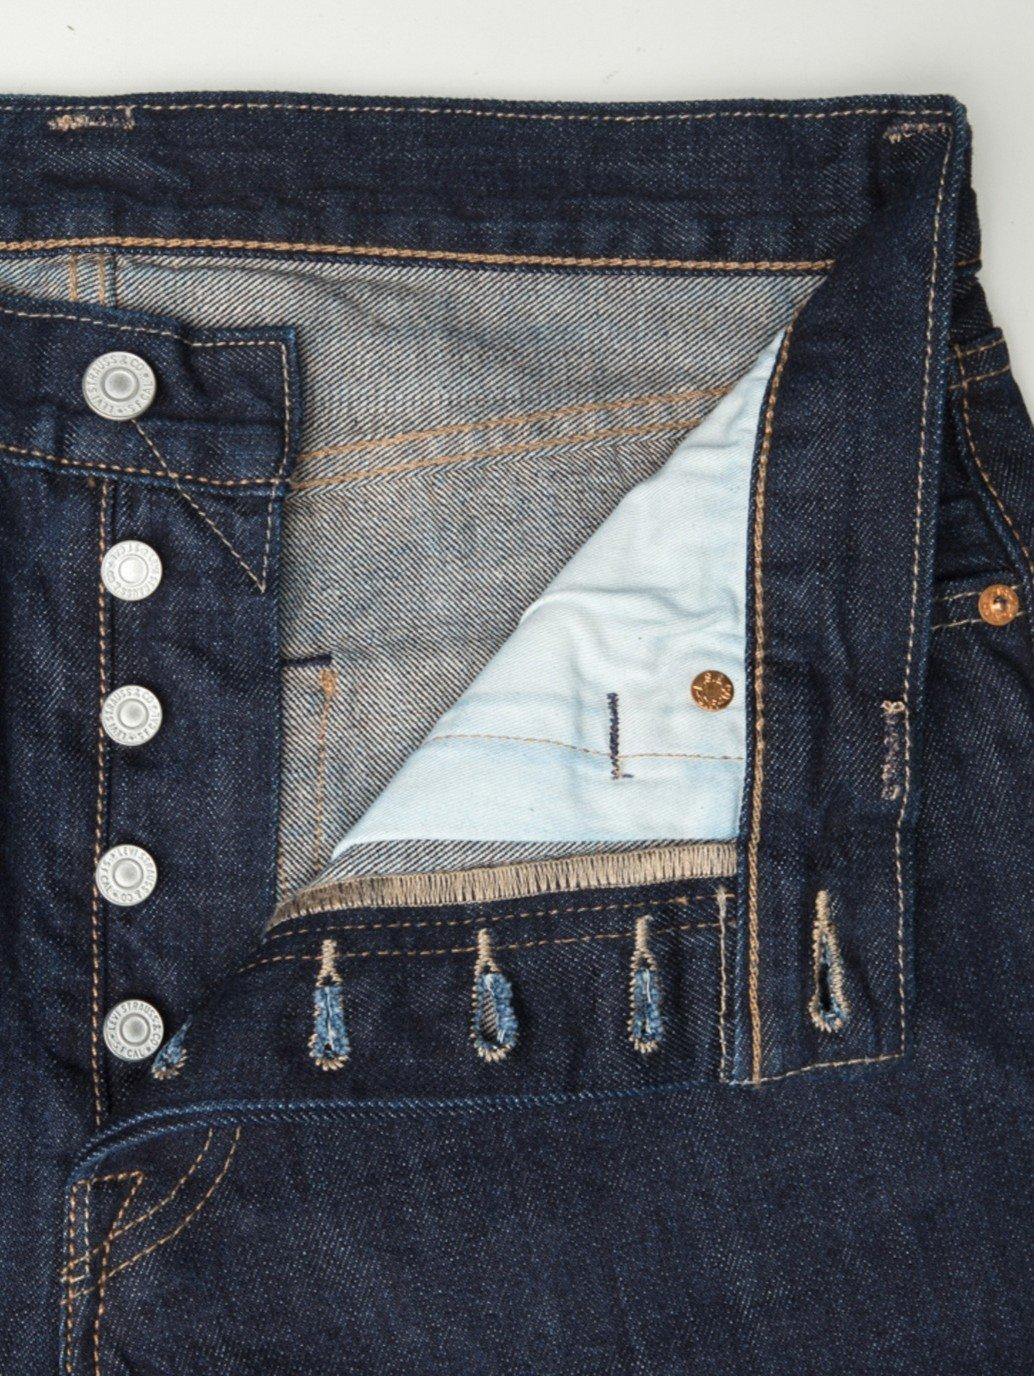 levis malaysia mens 501 original fit jeans new 005011484 16 Details